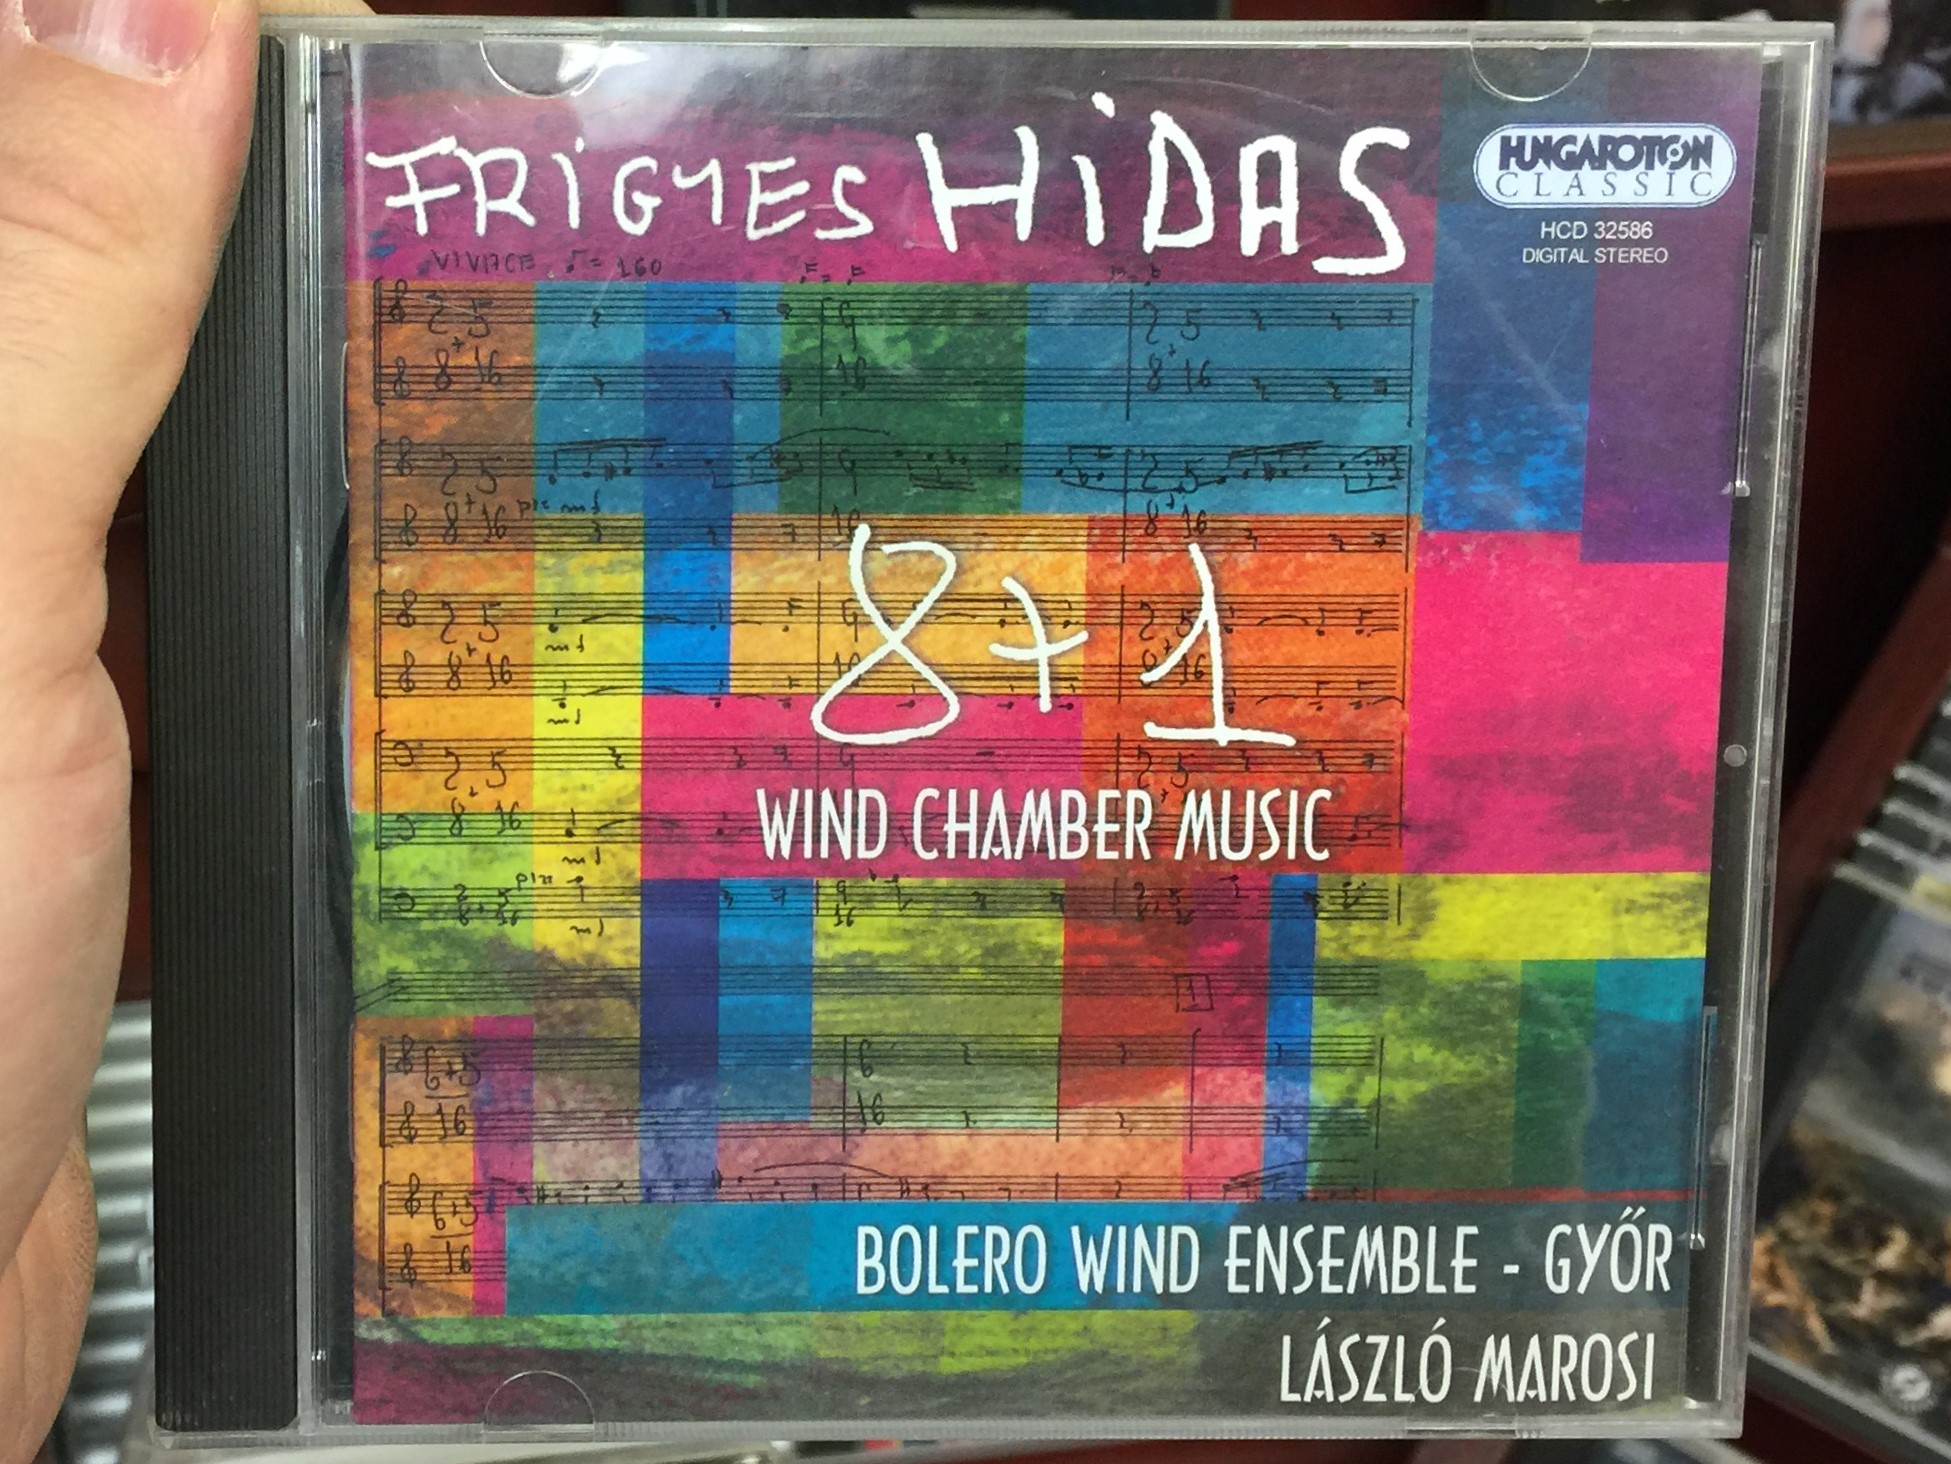 frigyes-hidas-8-1-wind-chamber-music-bolero-wind-ensemble-gyor-laszlo-marosi-hungaroton-classic-audio-cd-2008-stereo-hcd-32856-1-.jpg